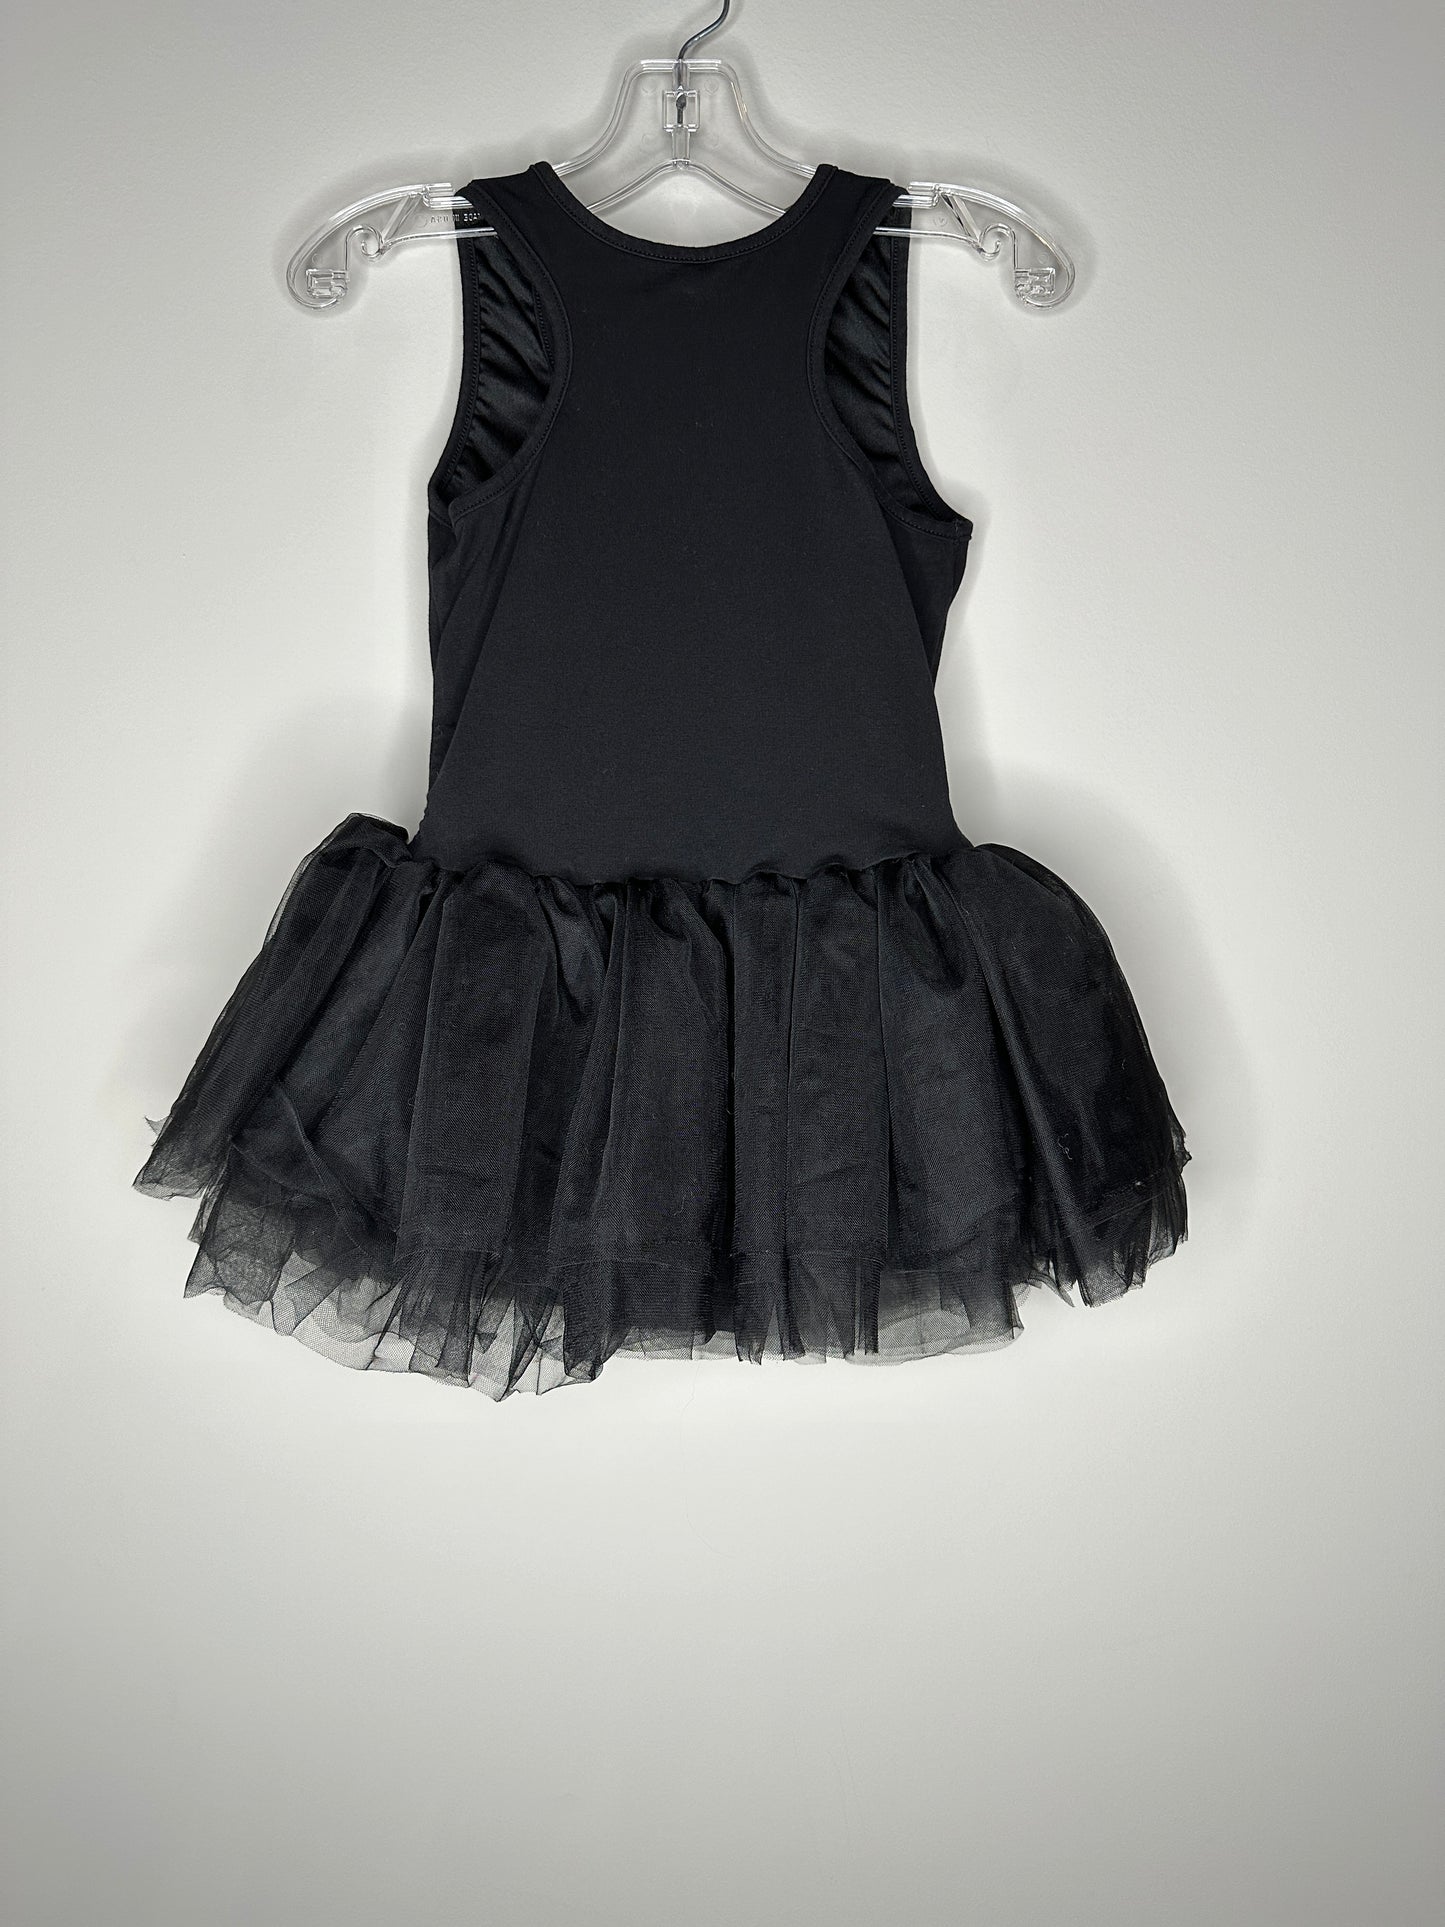 Girls' Approx. Size 5T Black Pull-On Tutu Ballet Leotard Dance Dress Dance Costume